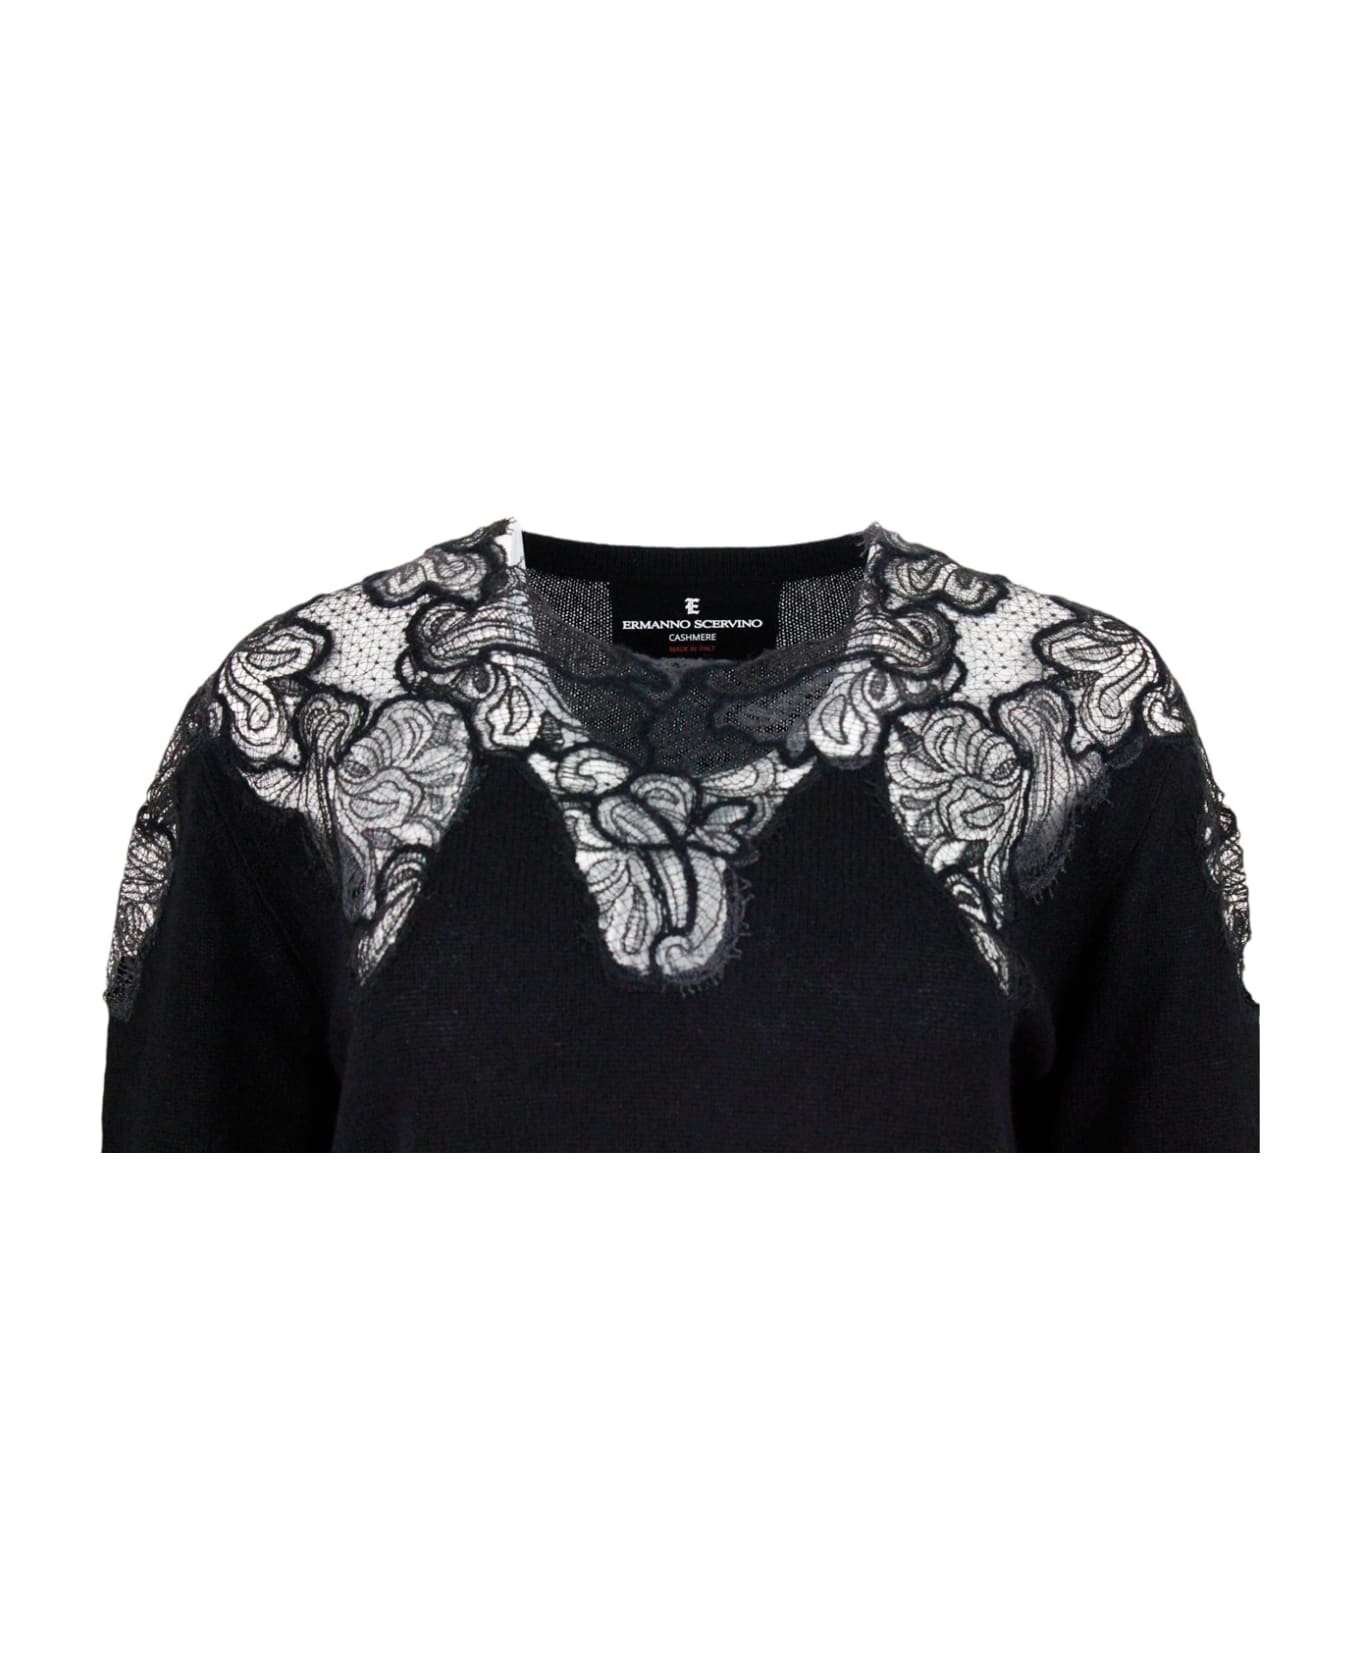 Ermanno Scervino Crewneck Sweater With Lace - Black